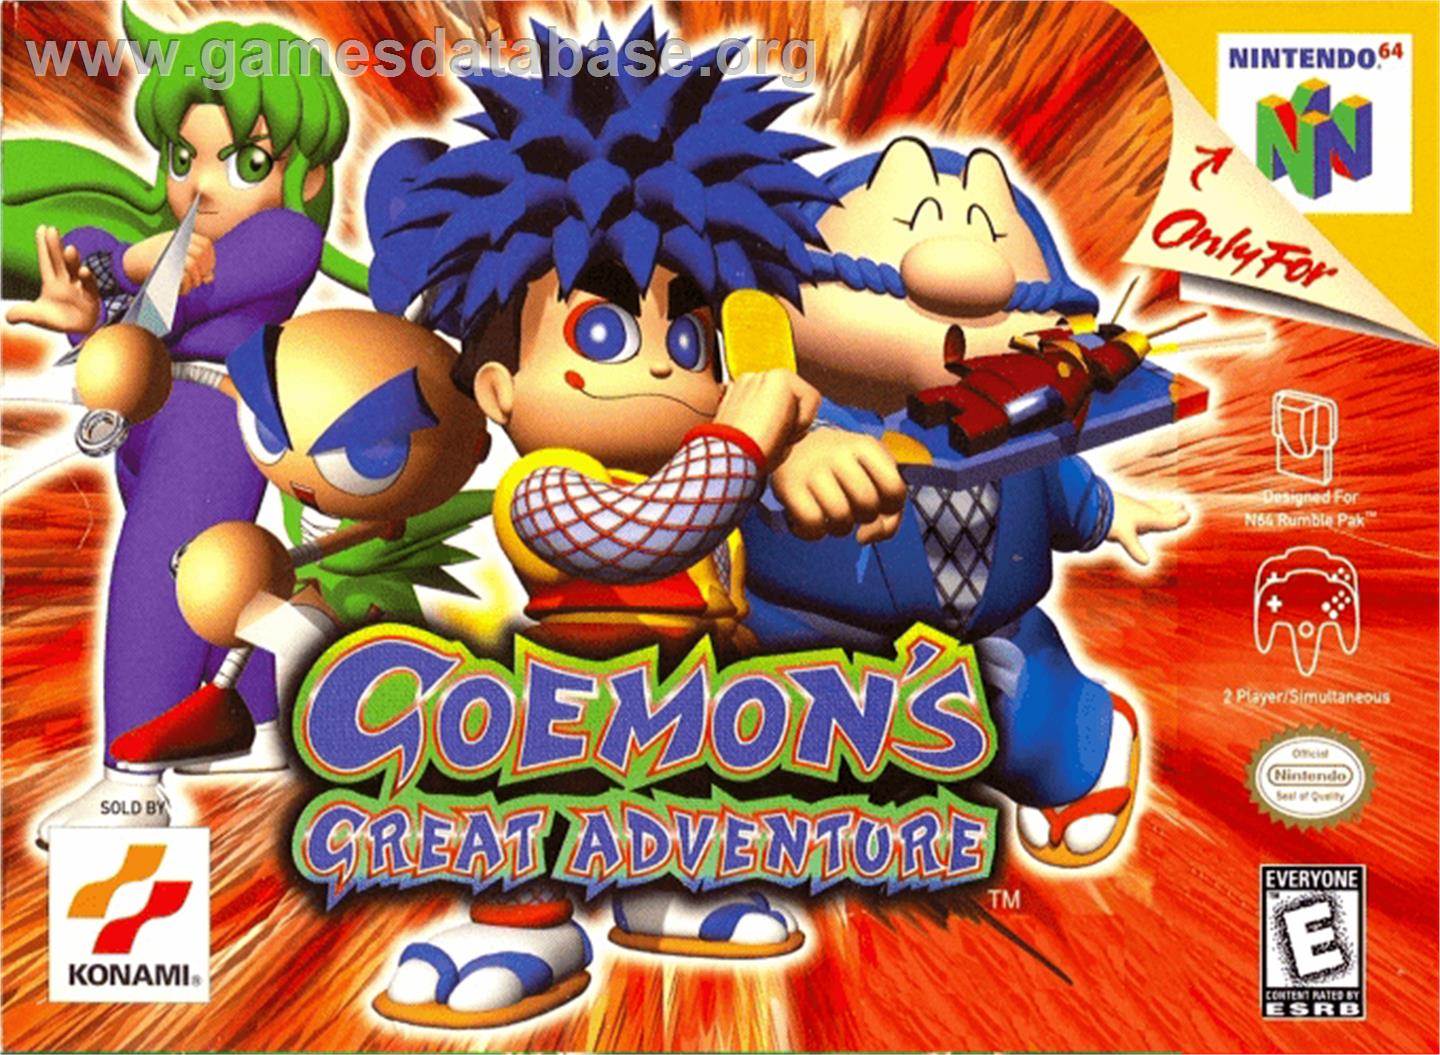 Goemon's Great Adventure - Nintendo N64 - Artwork - Box